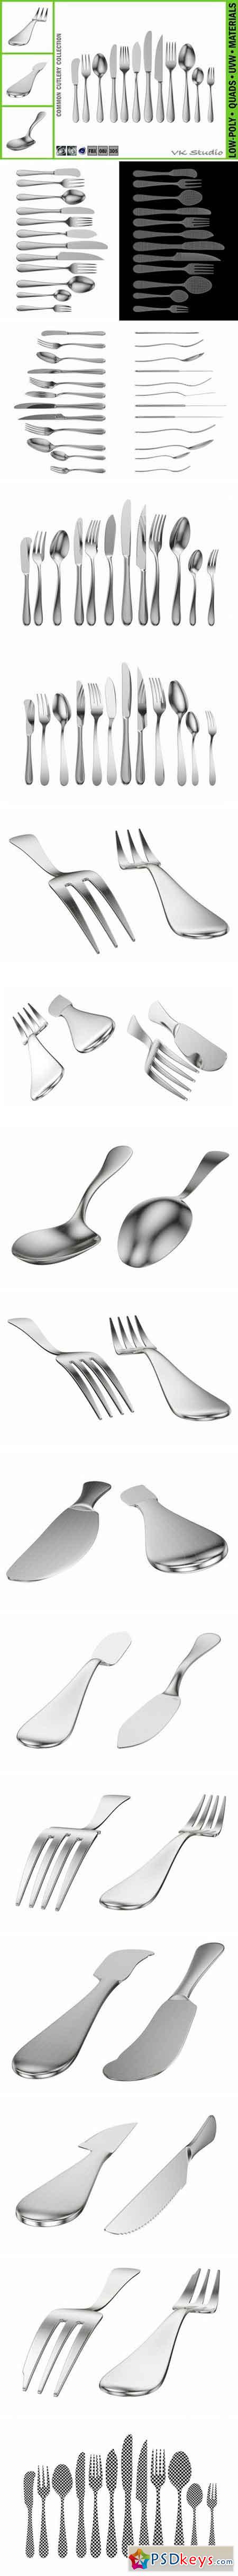 Common Cutlery Set 12 Pieces 2516690